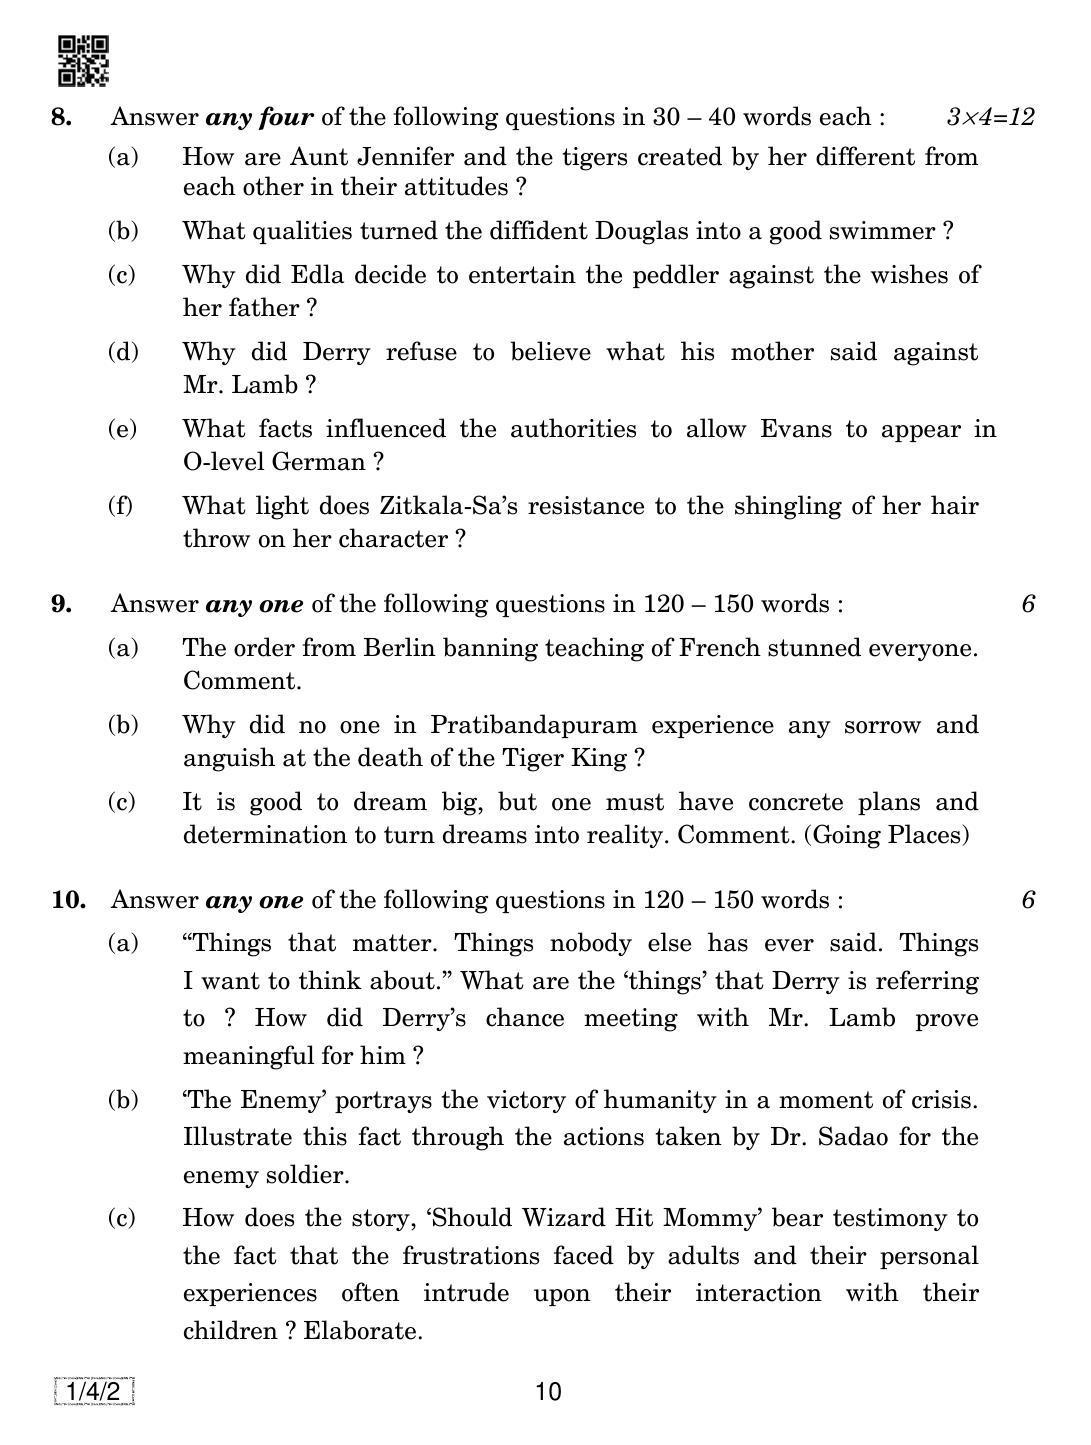 CBSE Class 12 1-4-2 English Core 2019 Question Paper - Page 10